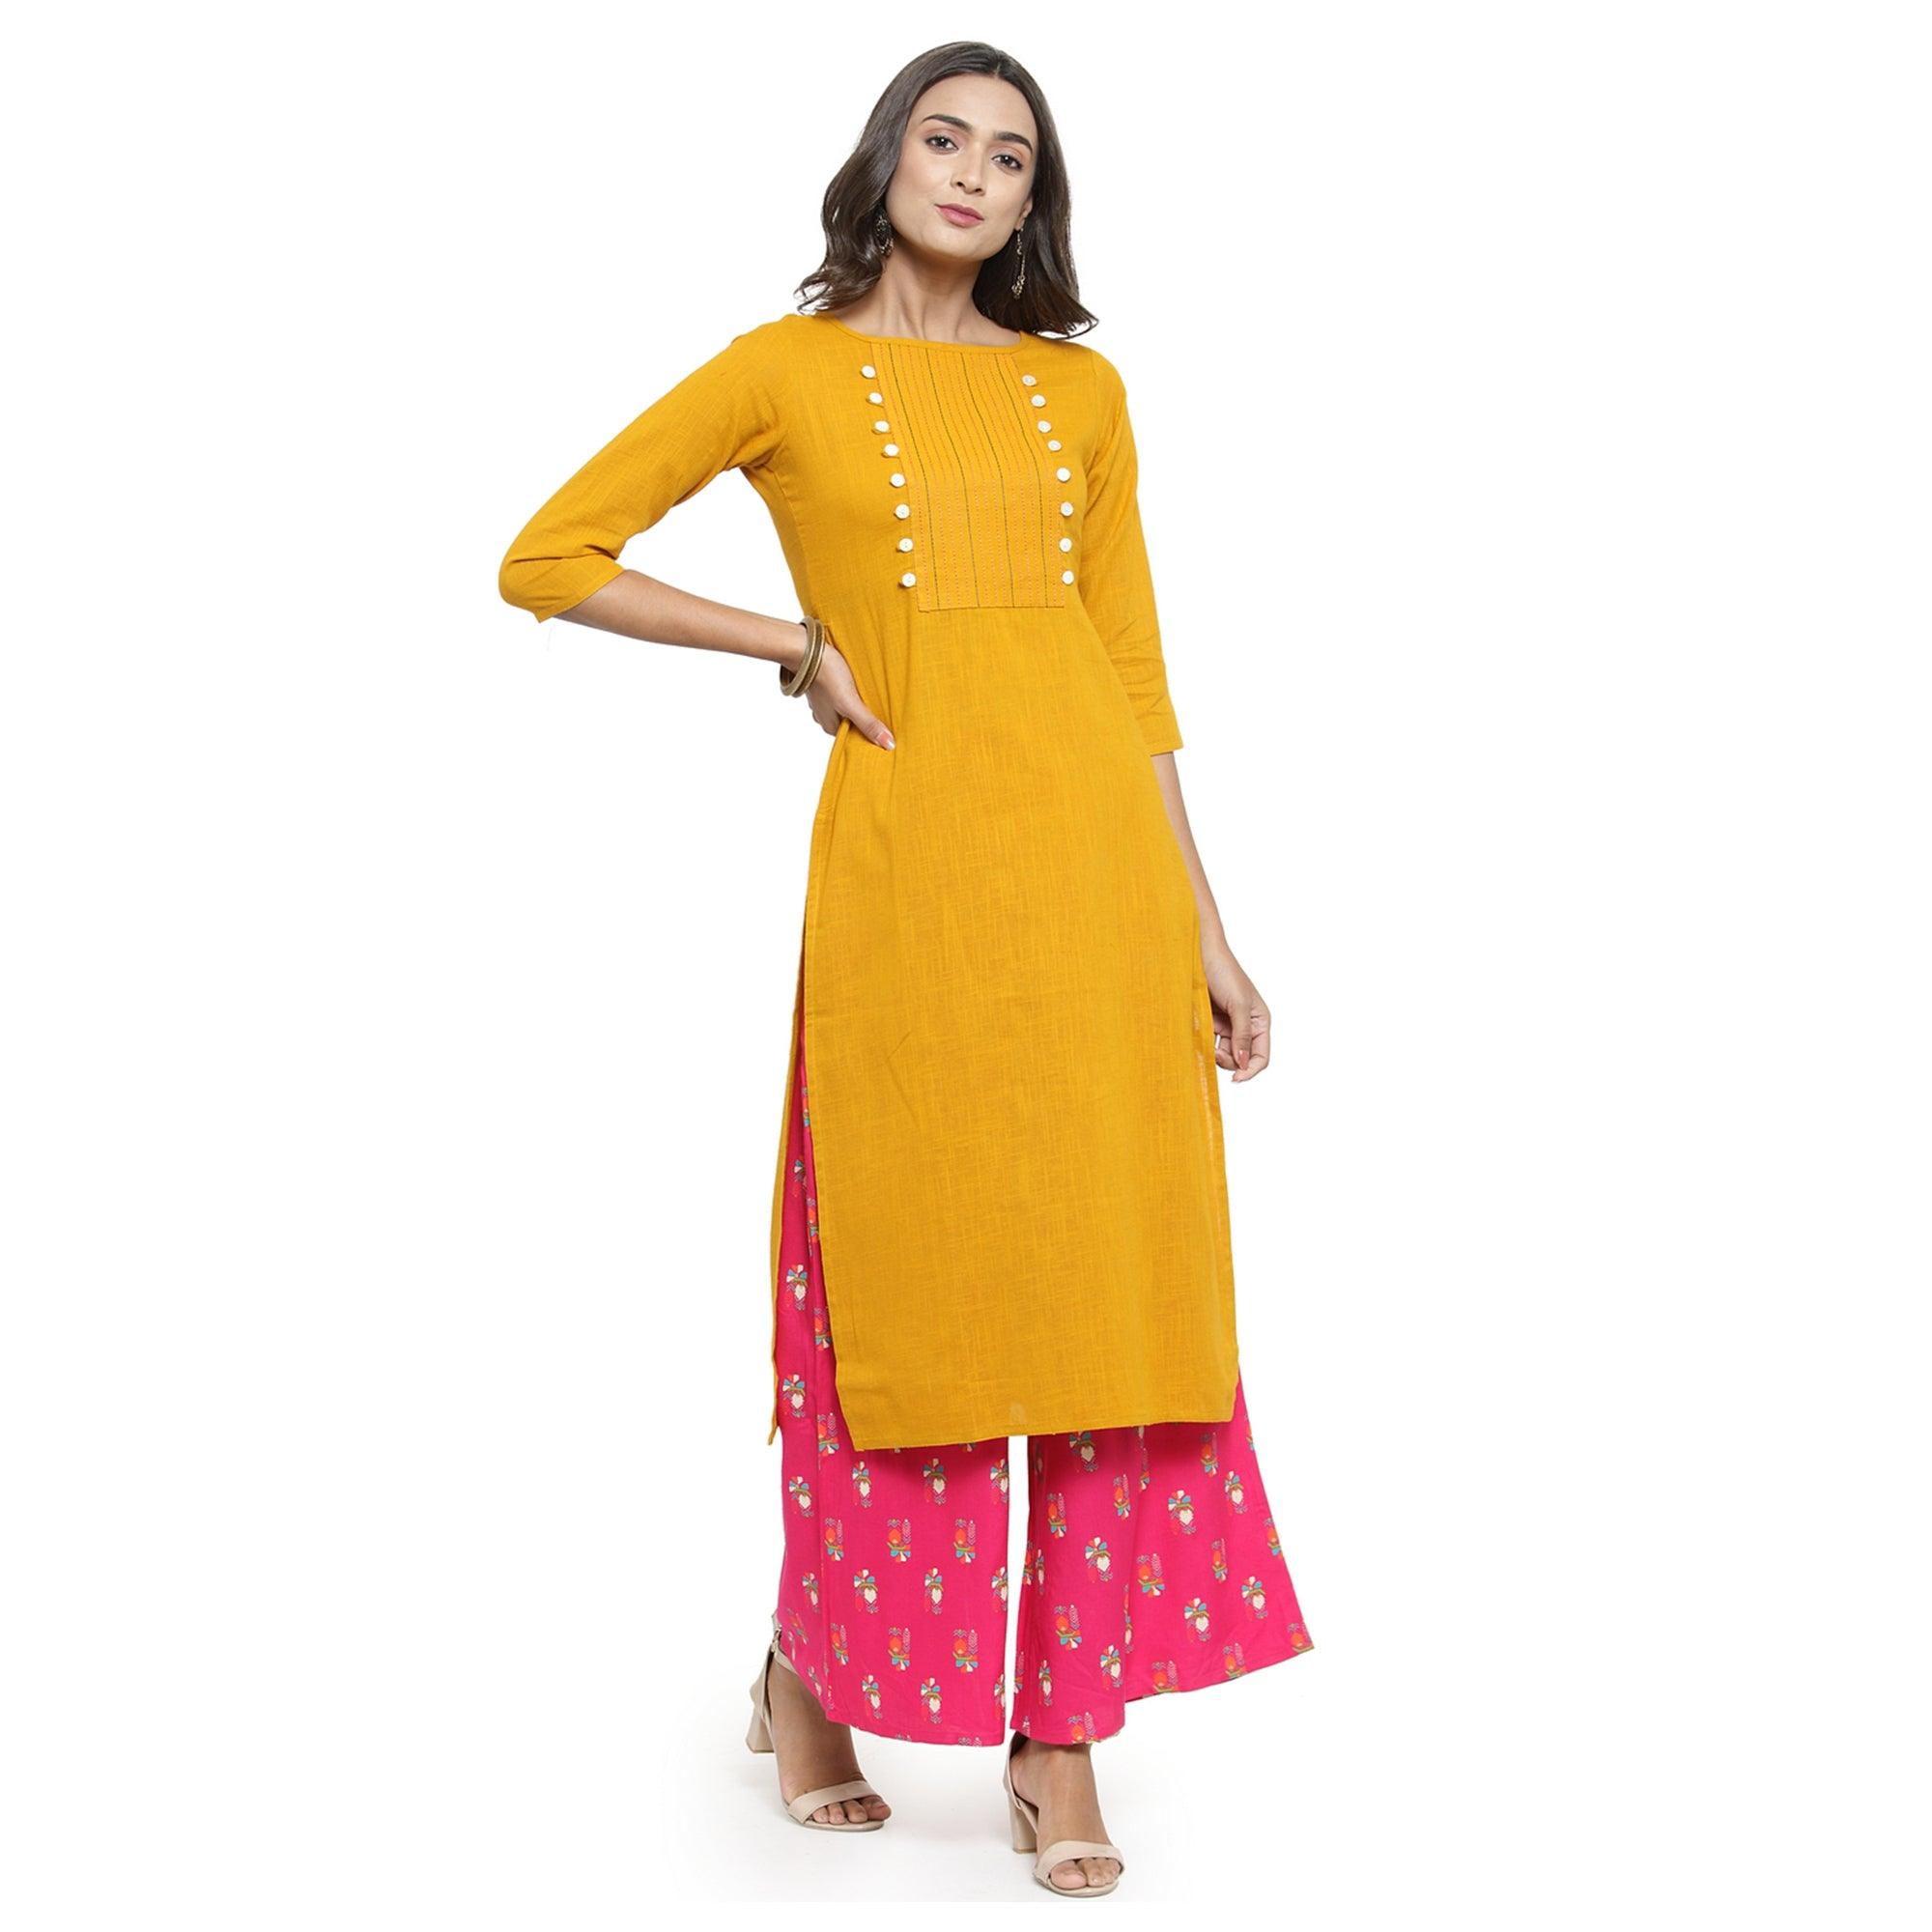 Delightful Yellow Colored Casual Wear Embroidered Cotton Kurti - Peachmode